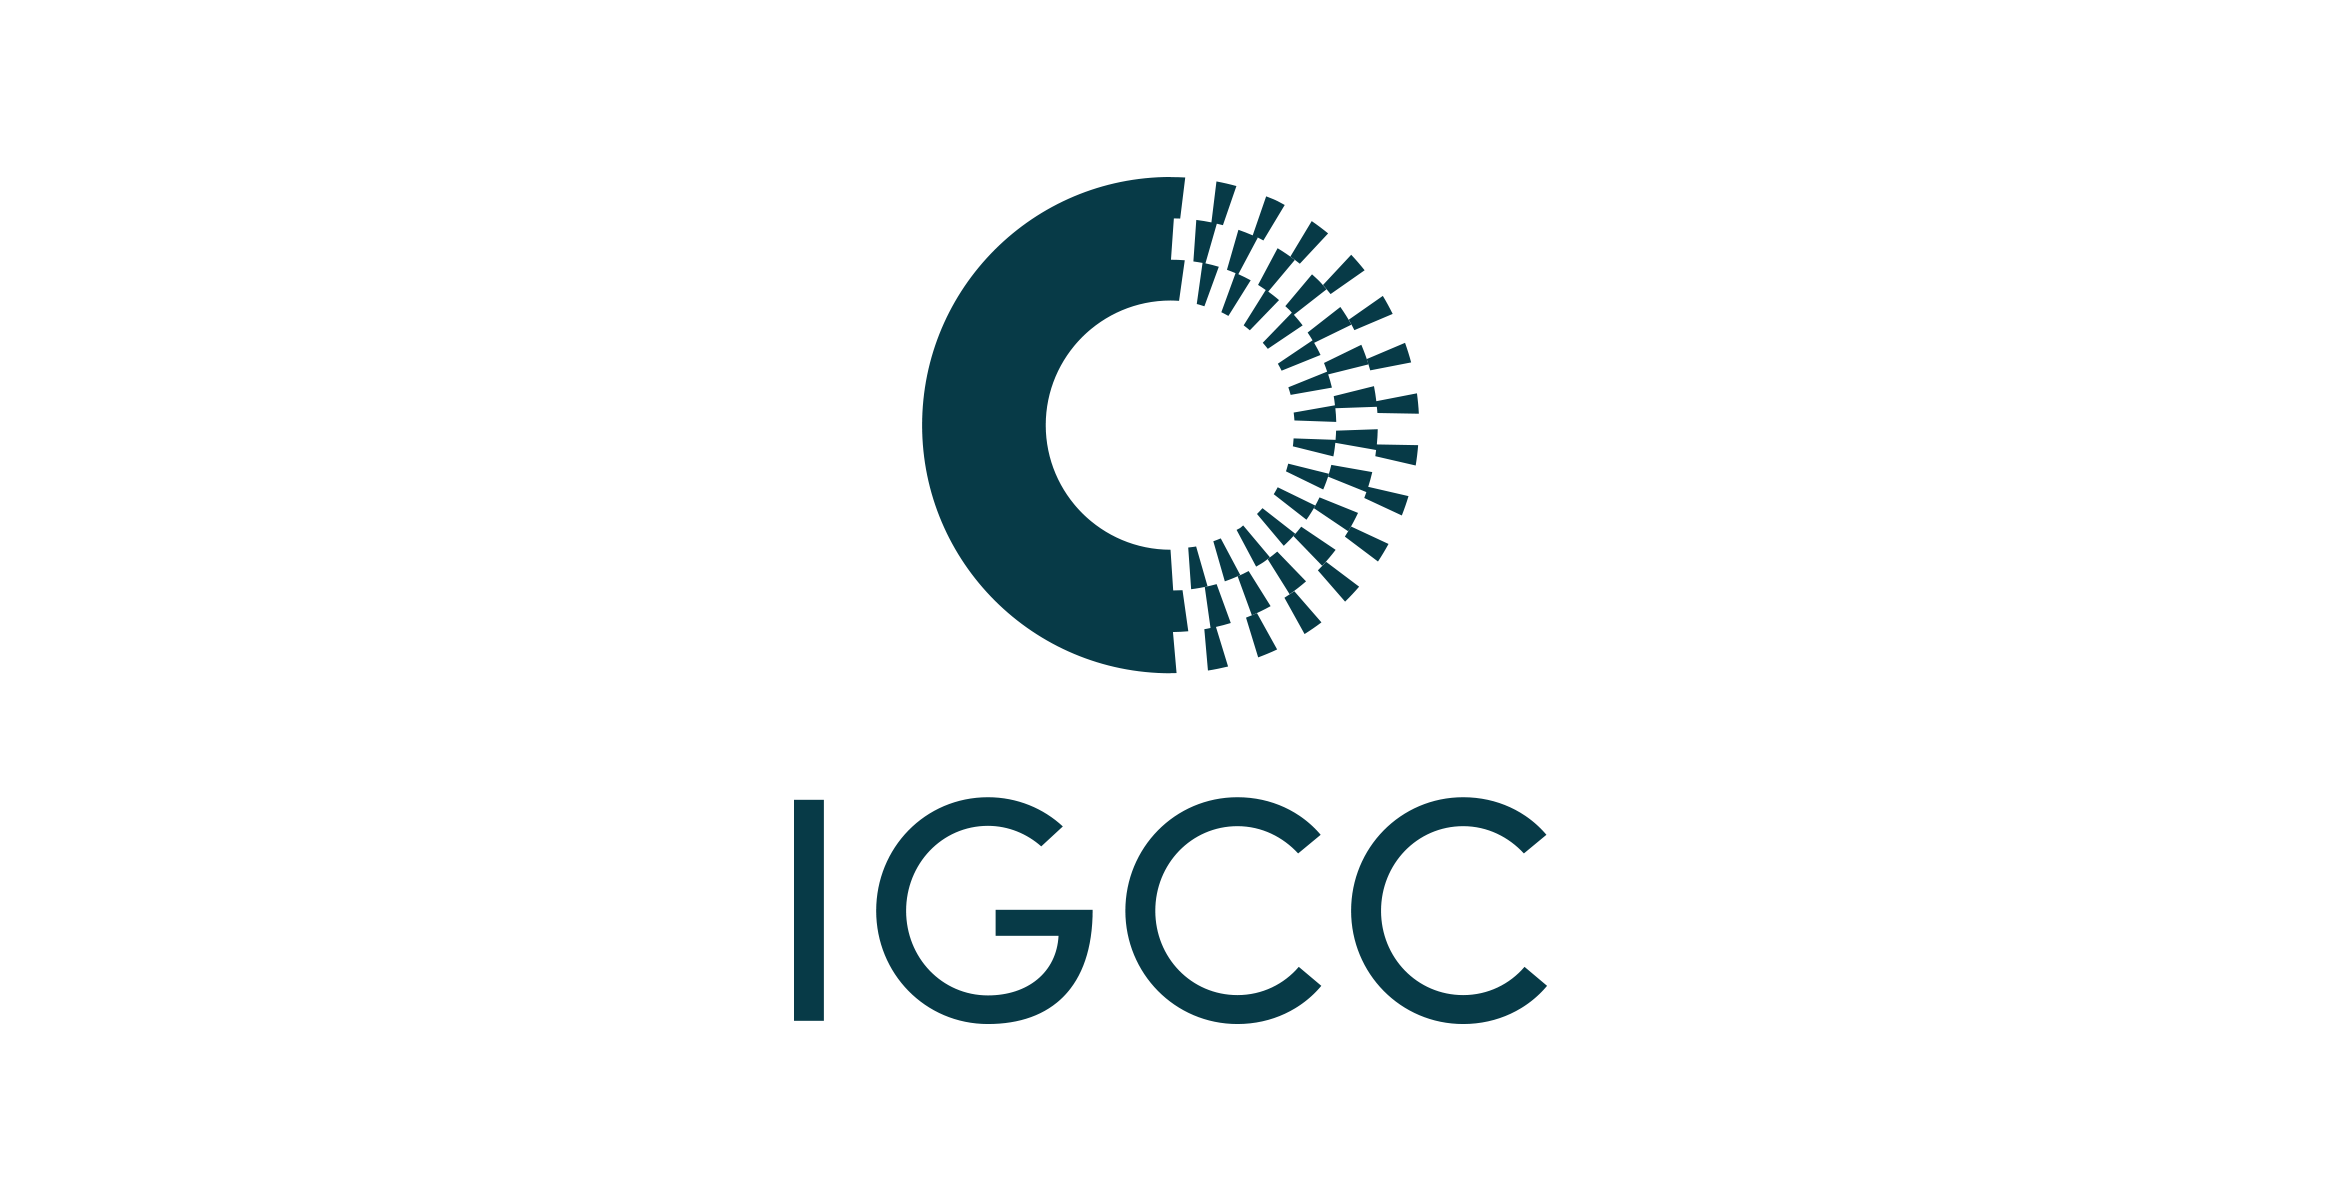 stacked IGCC logo in teal on white